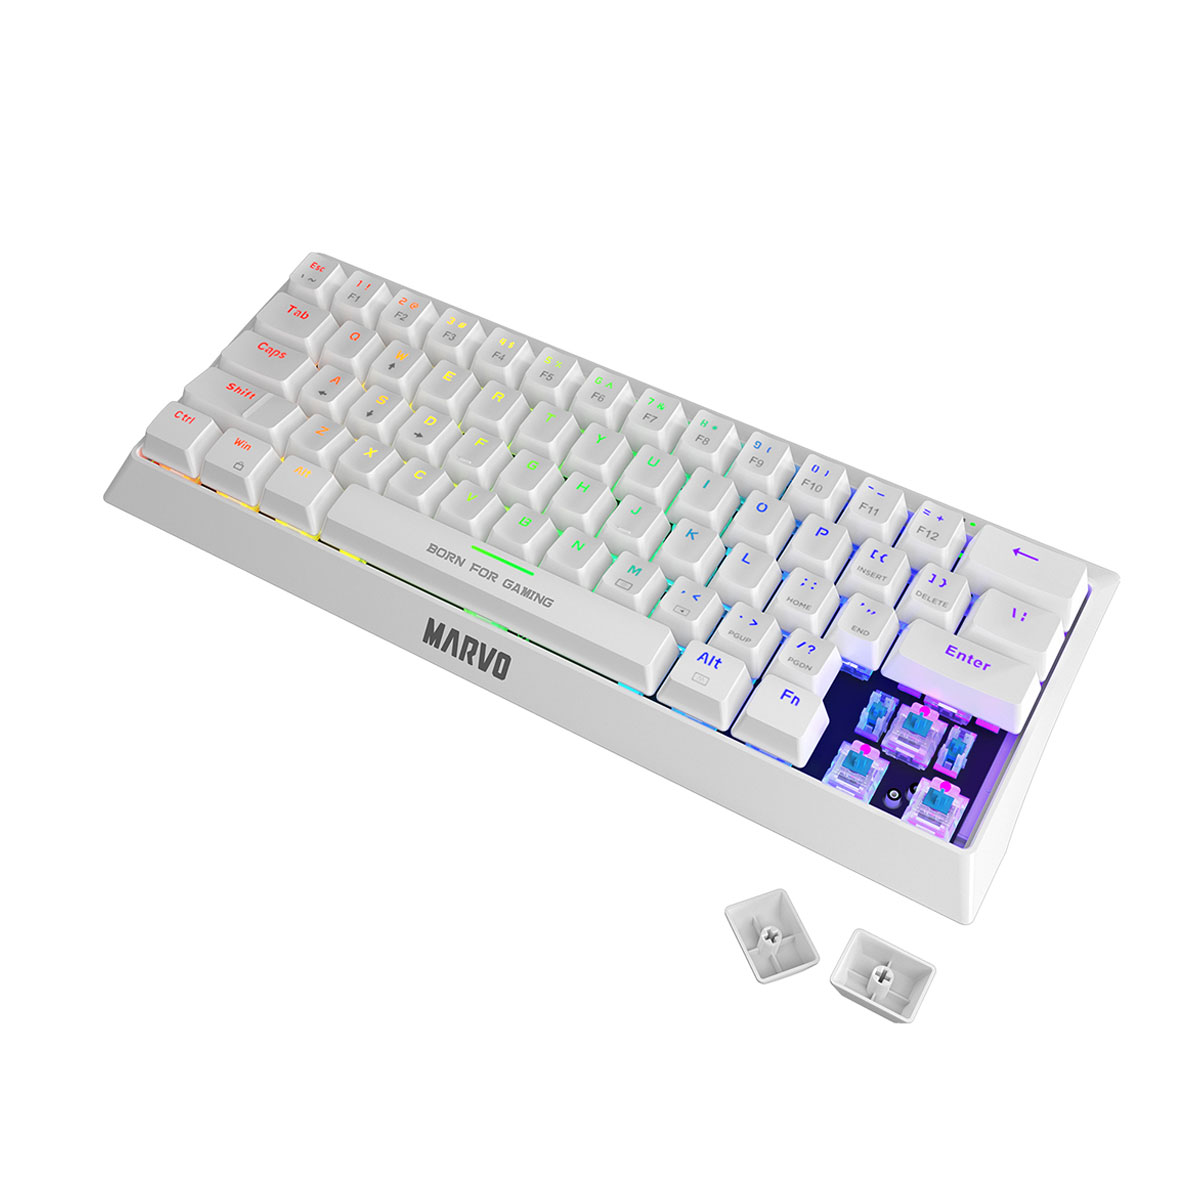 kg962wh-keyboard-05